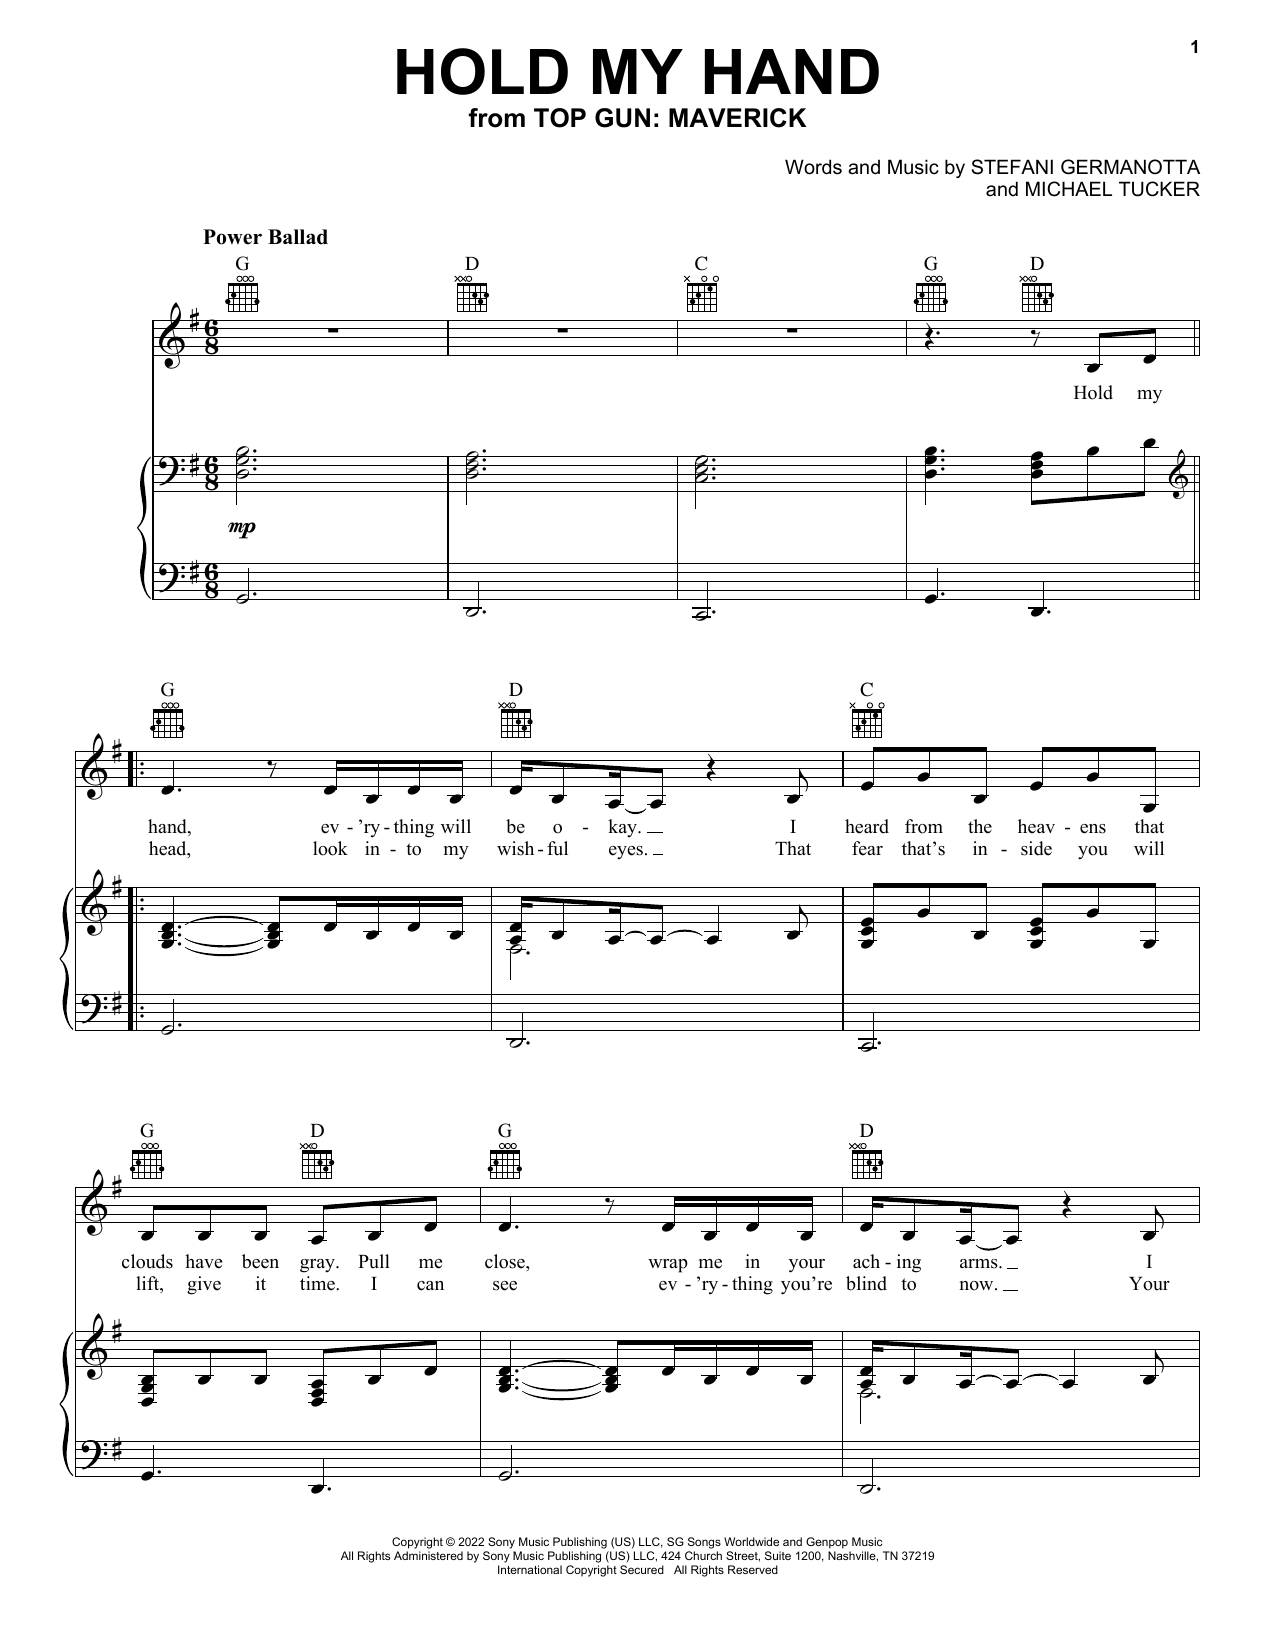 Lady Gaga Hold My Hand (from Top Gun: Maverick) Sheet Music Notes & Chords for Violin Solo - Download or Print PDF